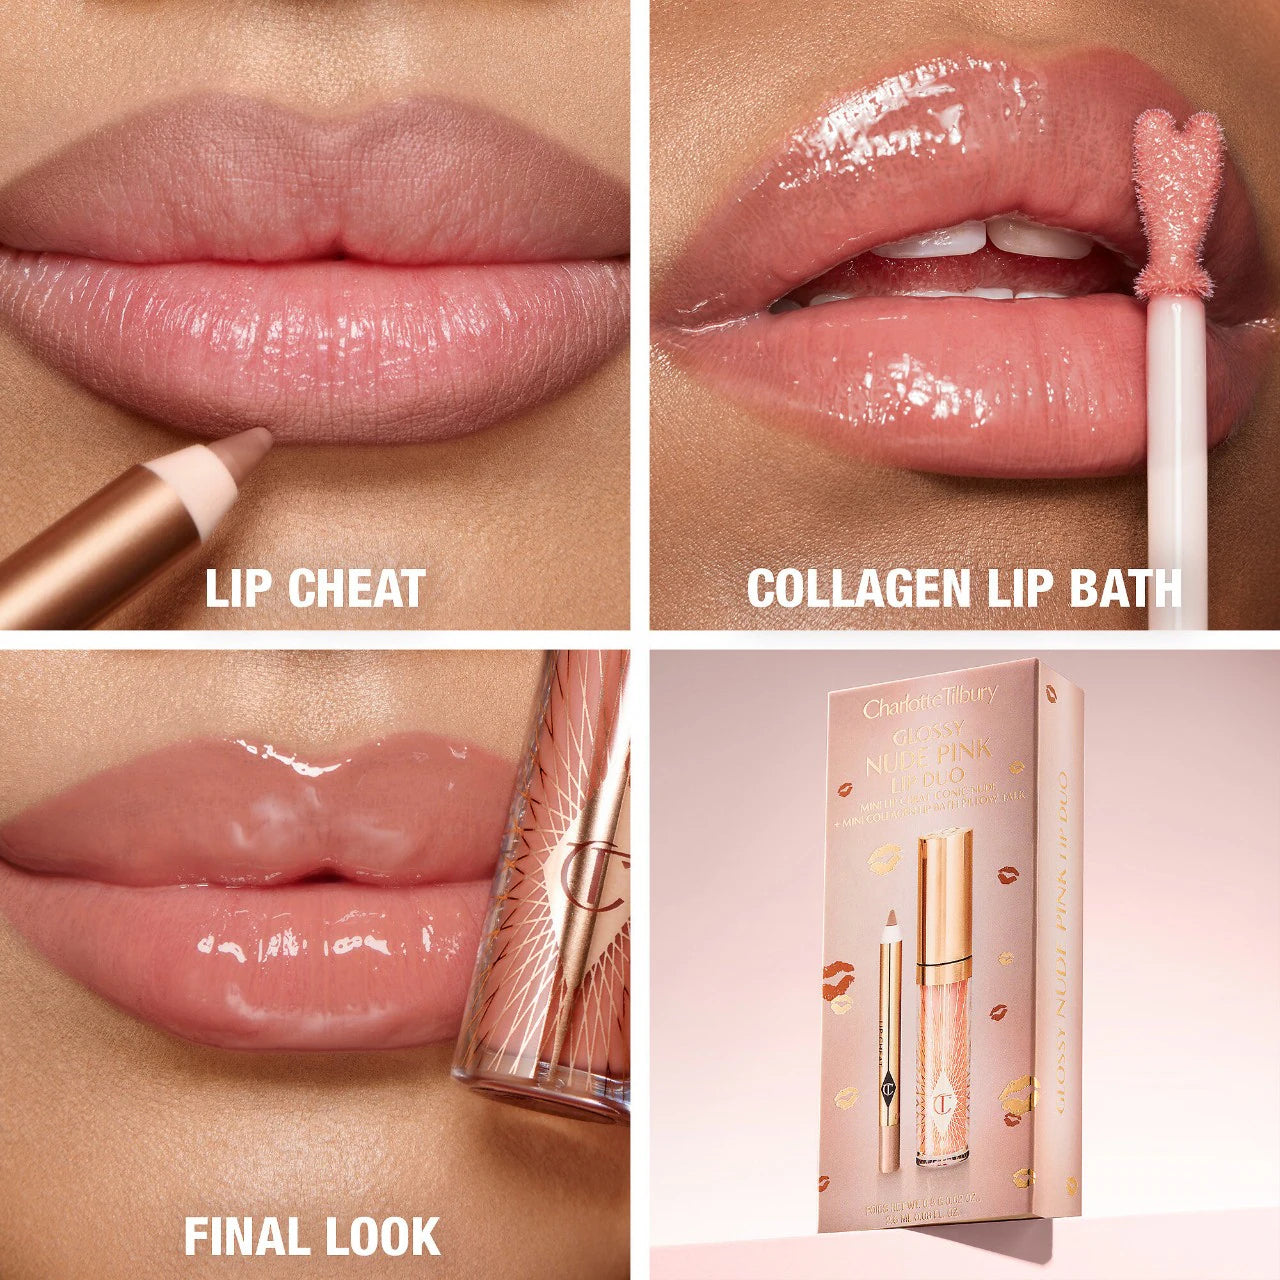 Charlotte Tilbury | Mini Glossy Pink Lip Gloss + Lip Liner Set | Nude Pink